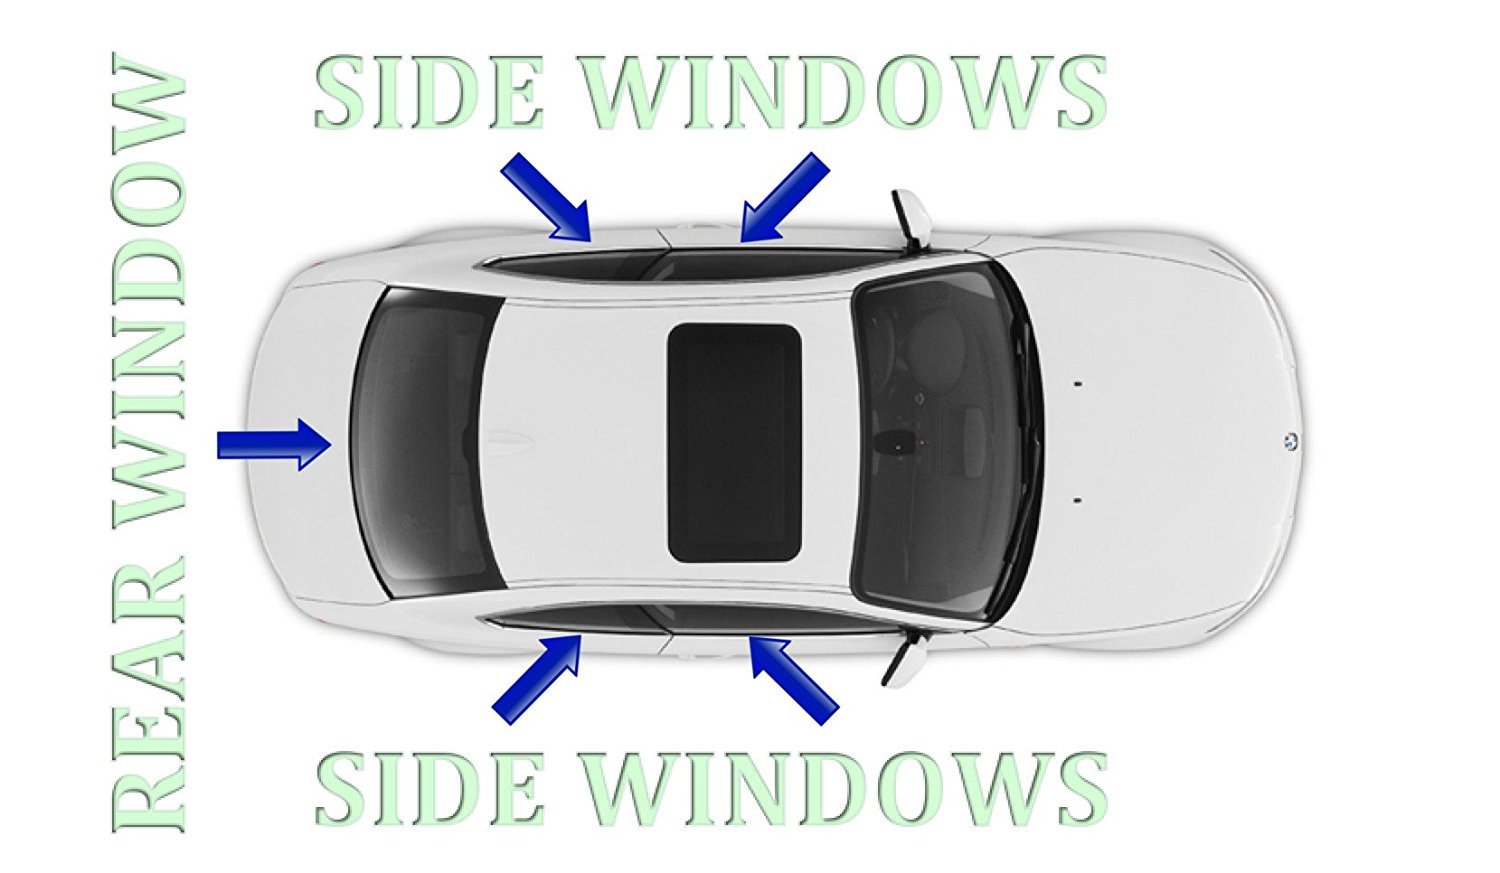 Autotech Park Precut Window Tinting Film for 2007-2014 Chevrolet Tahoe SUV